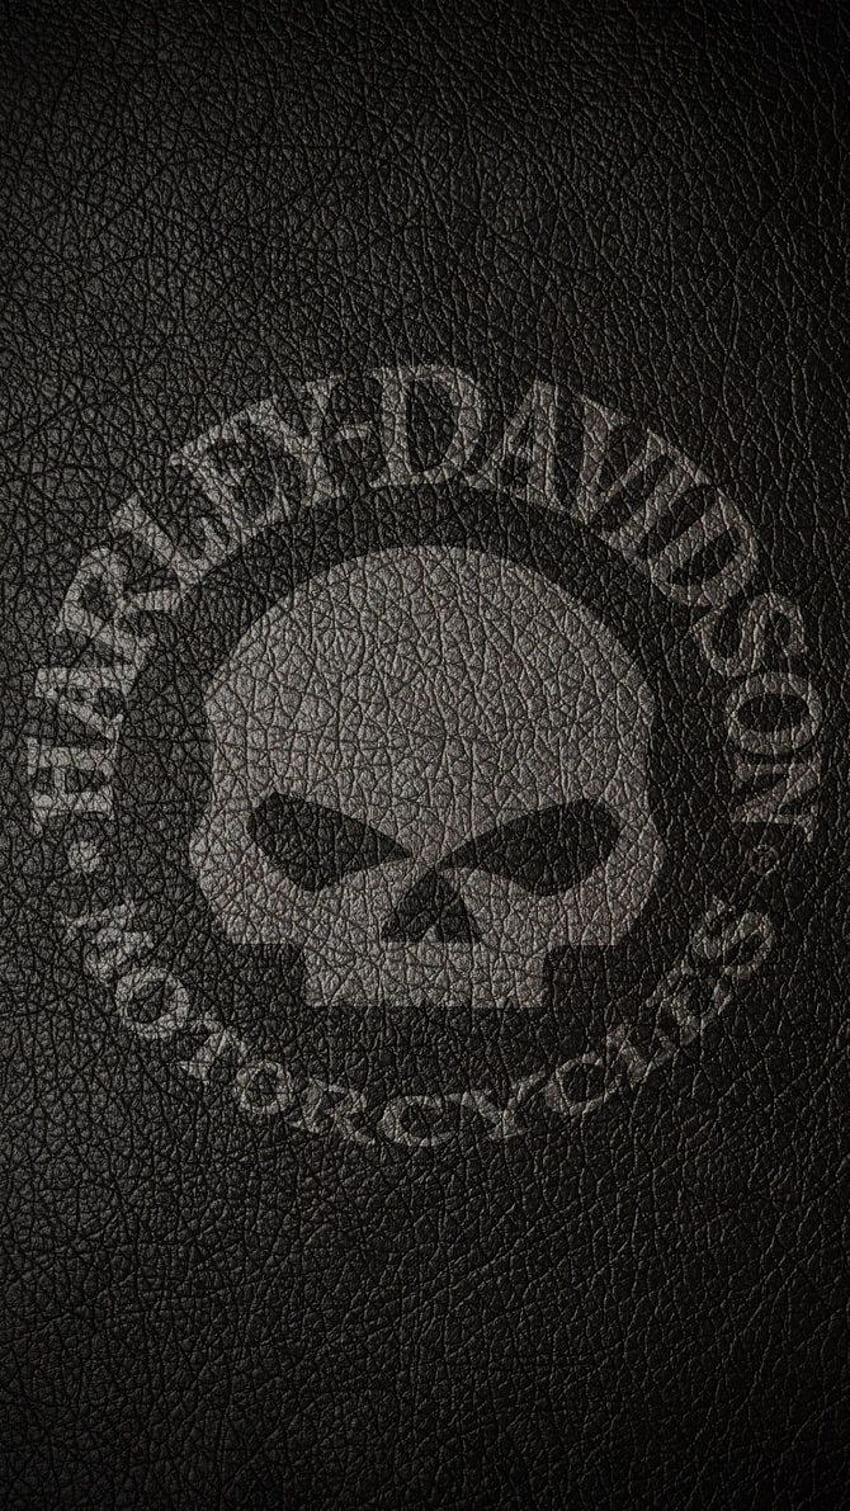 Teléfono de cuero Willie G Skull, Harley-Davidson Skull fondo de pantalla del teléfono